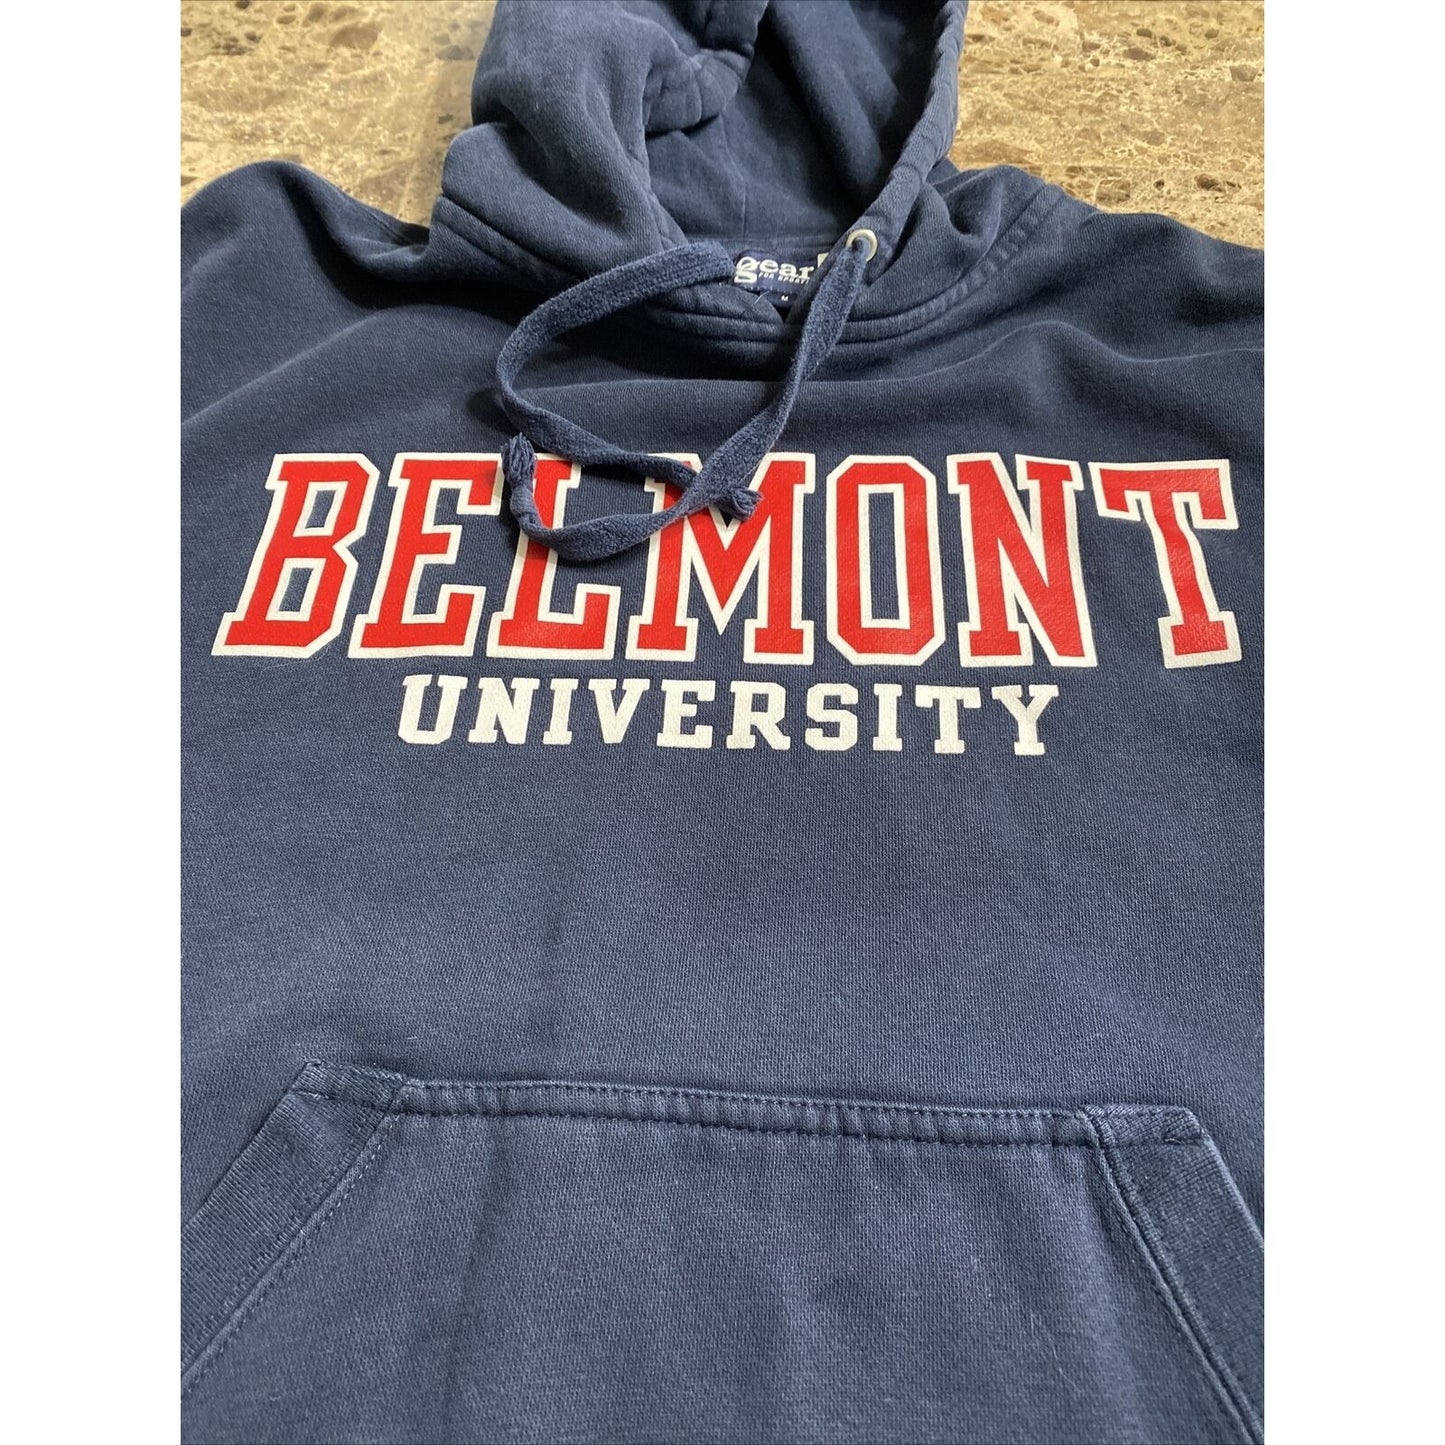 BELMONT UNIVERSITY Gear For Sports Men’s Medium Navy Blue Hoodie Sweatshirt